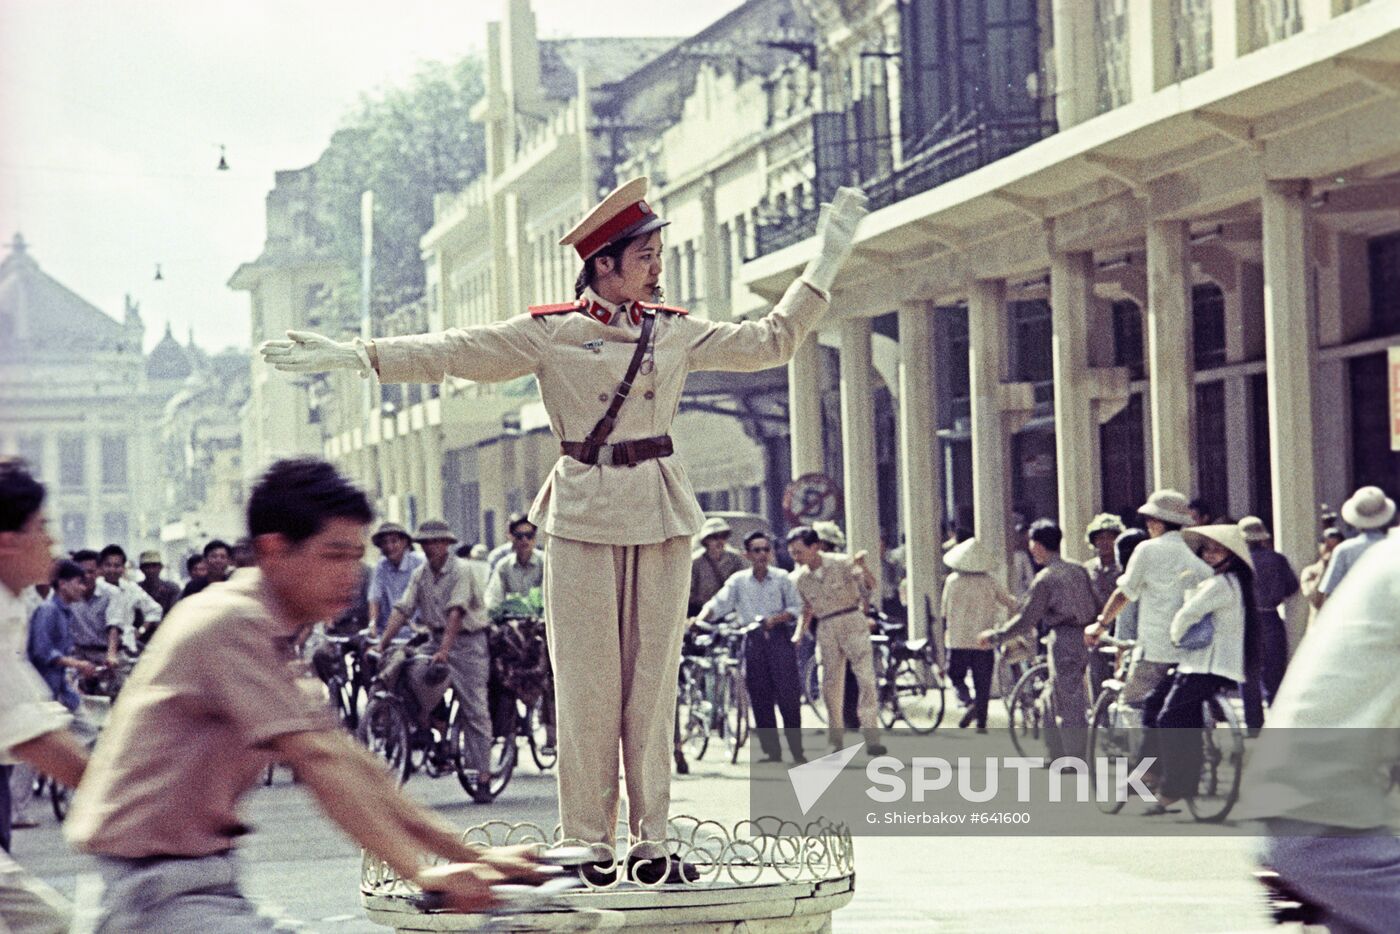 Traffic policeman in central Hanoi